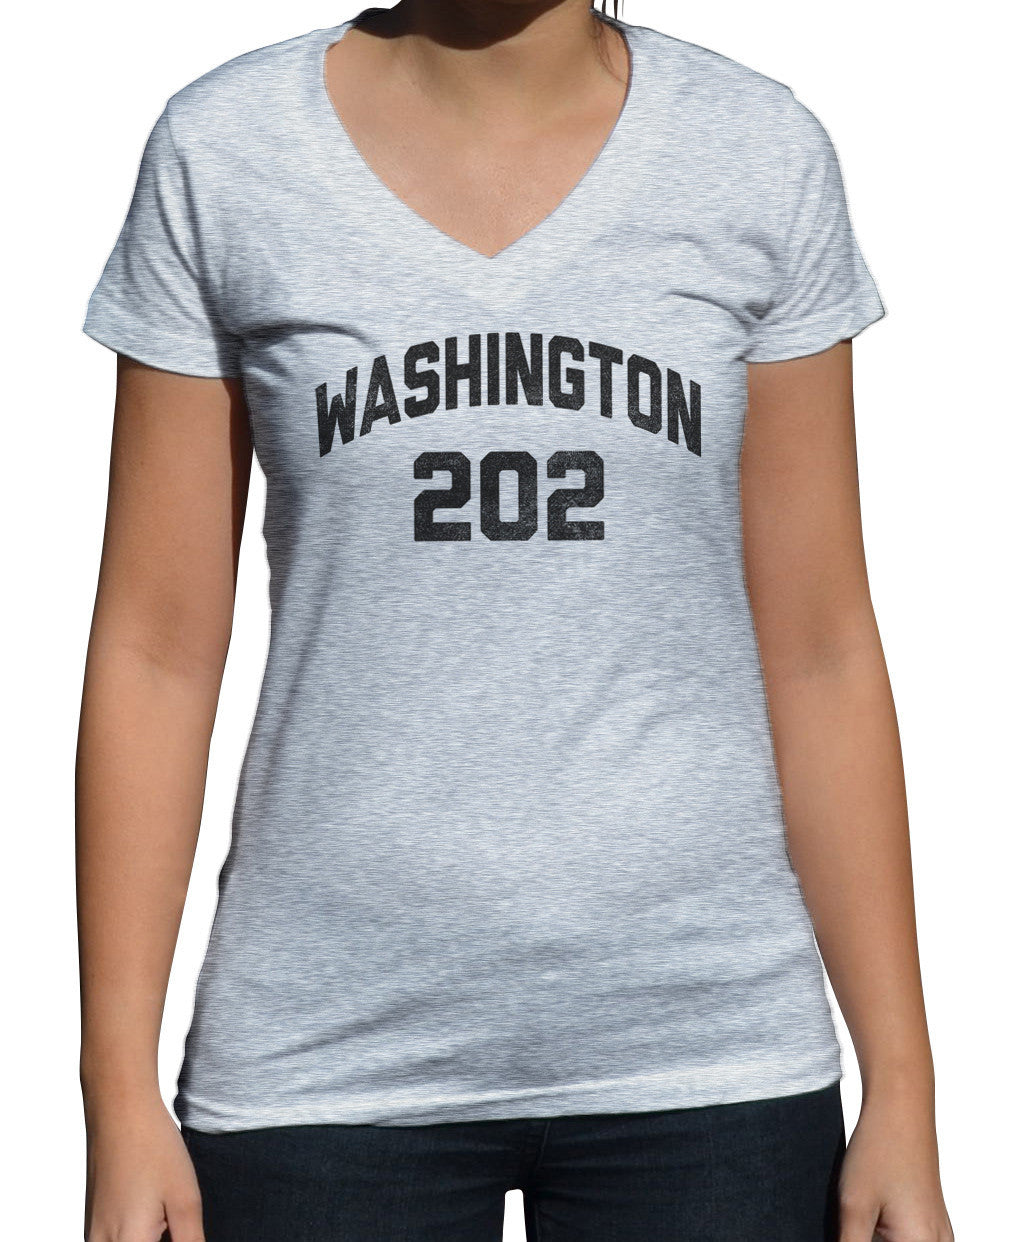 Women's Washington DC 202 Area Code Vneck T-Shirt